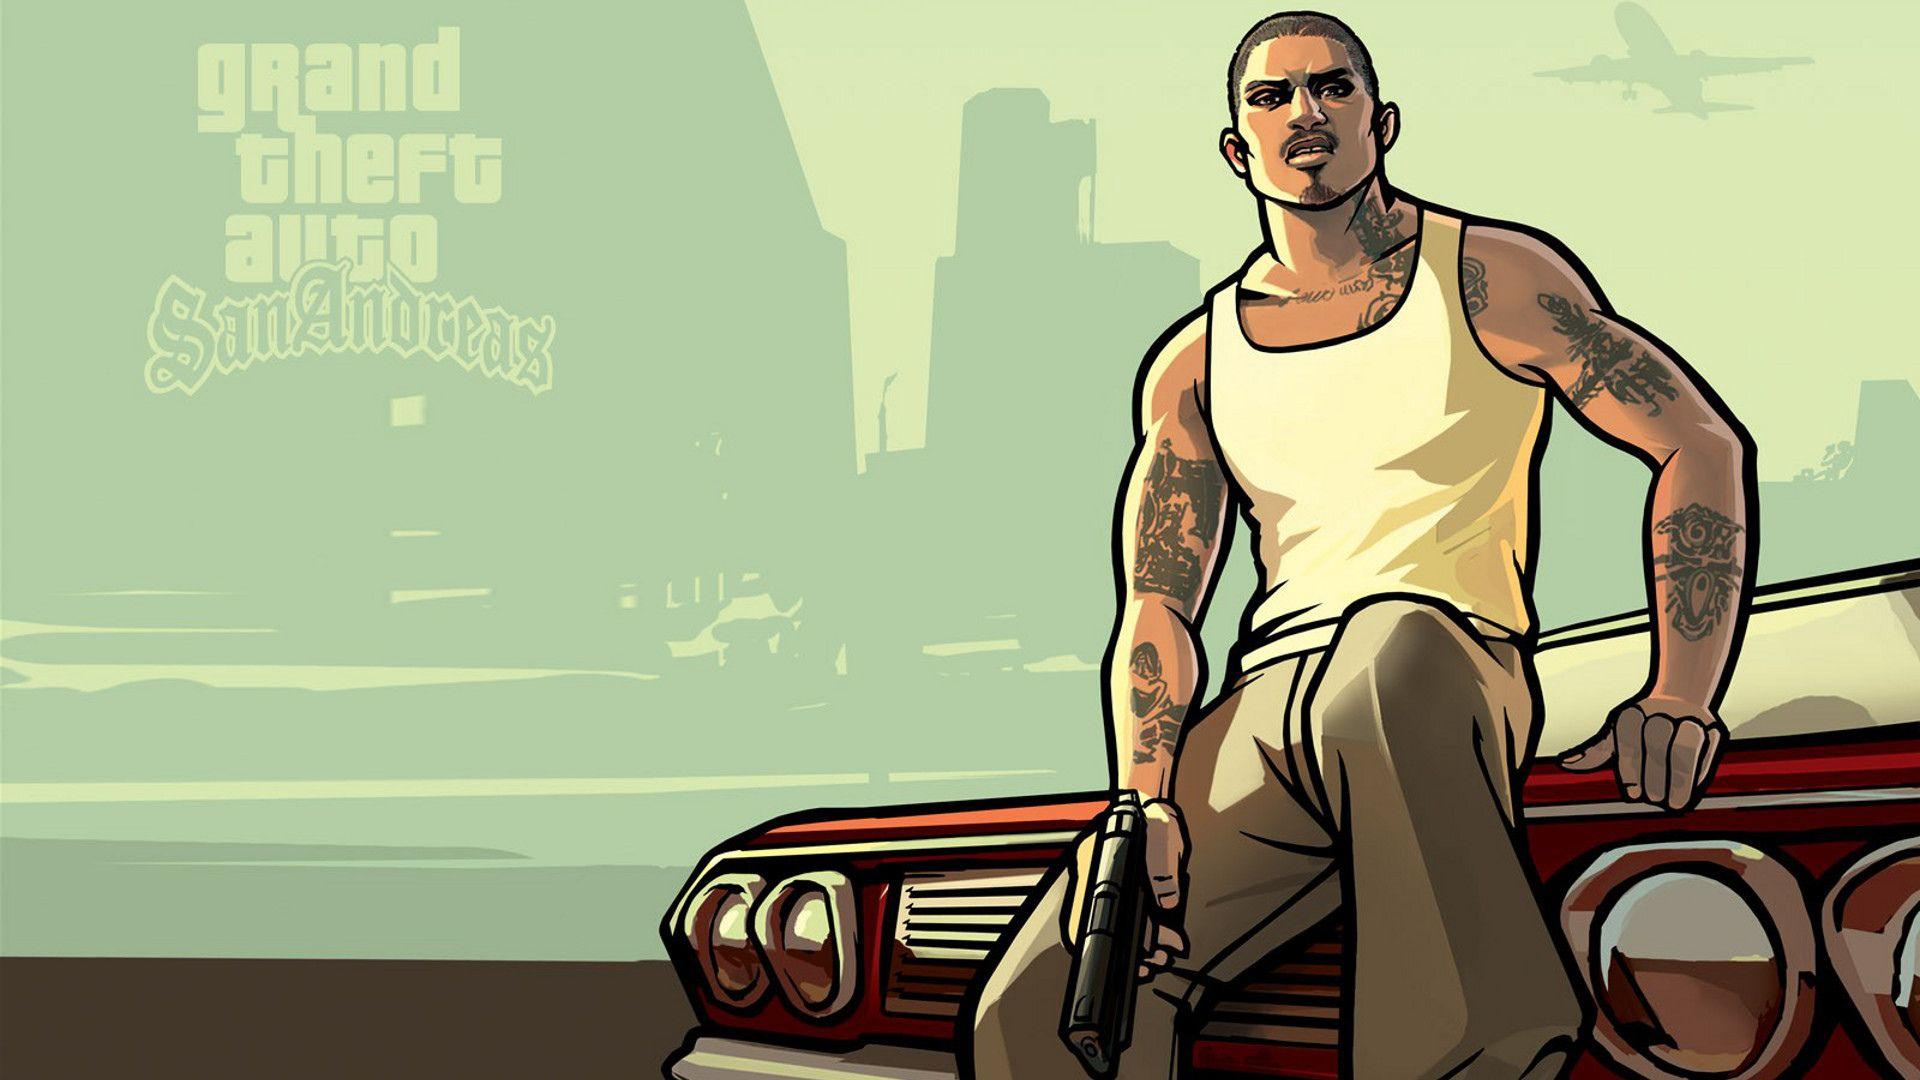 Grand Theft Auto: San Andreas HD Wallpaper. Background